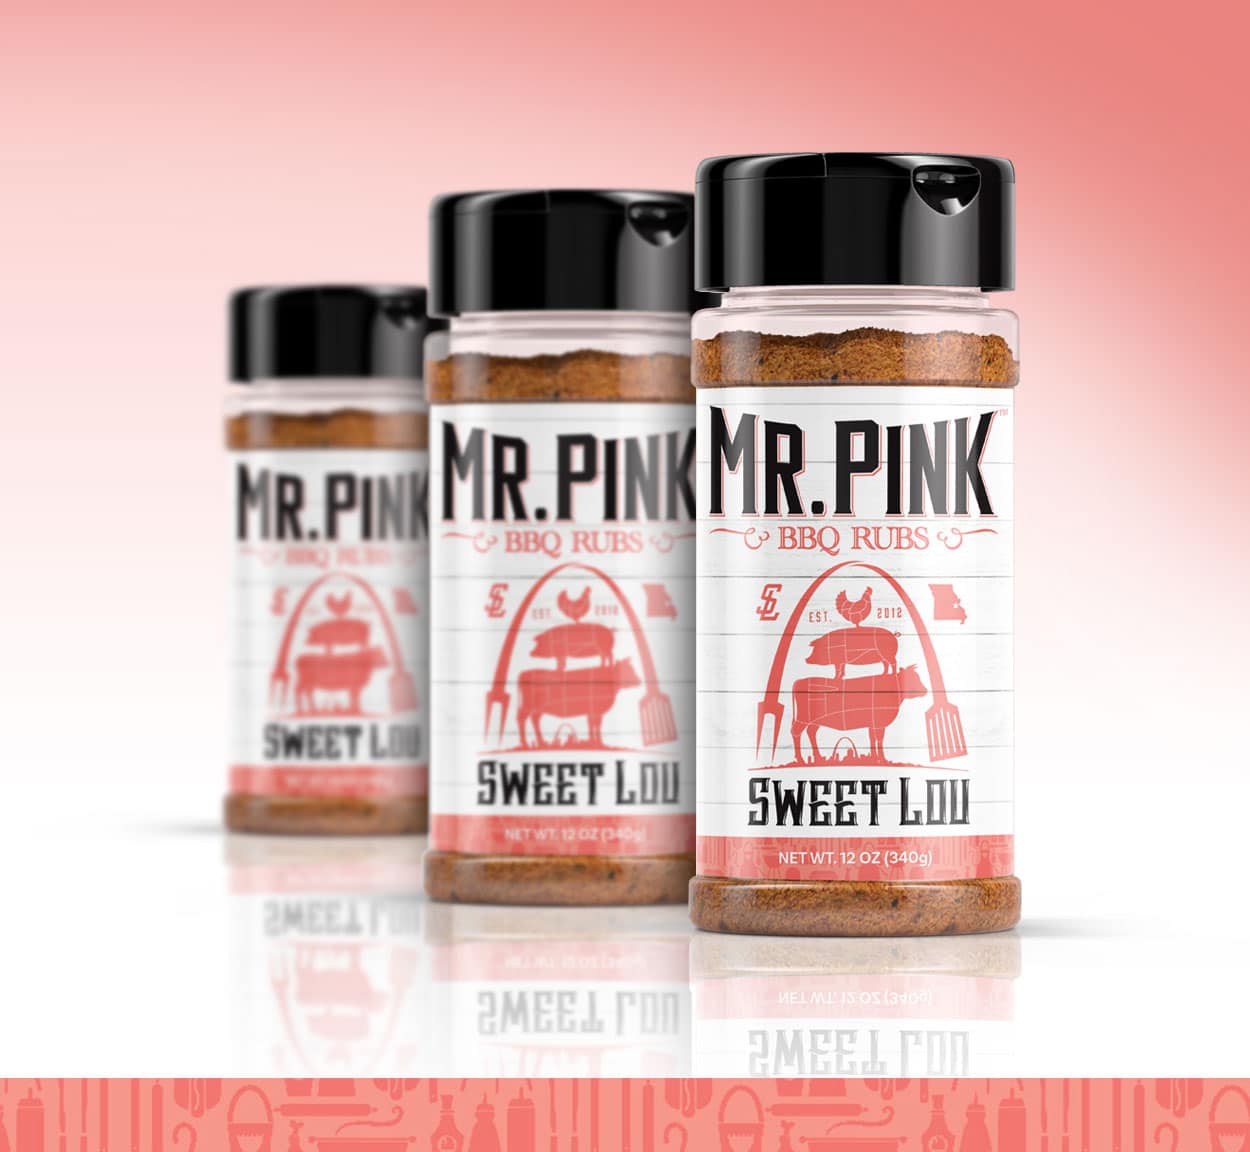 Mr. Pink Sweet Lou BBQ Rub branding